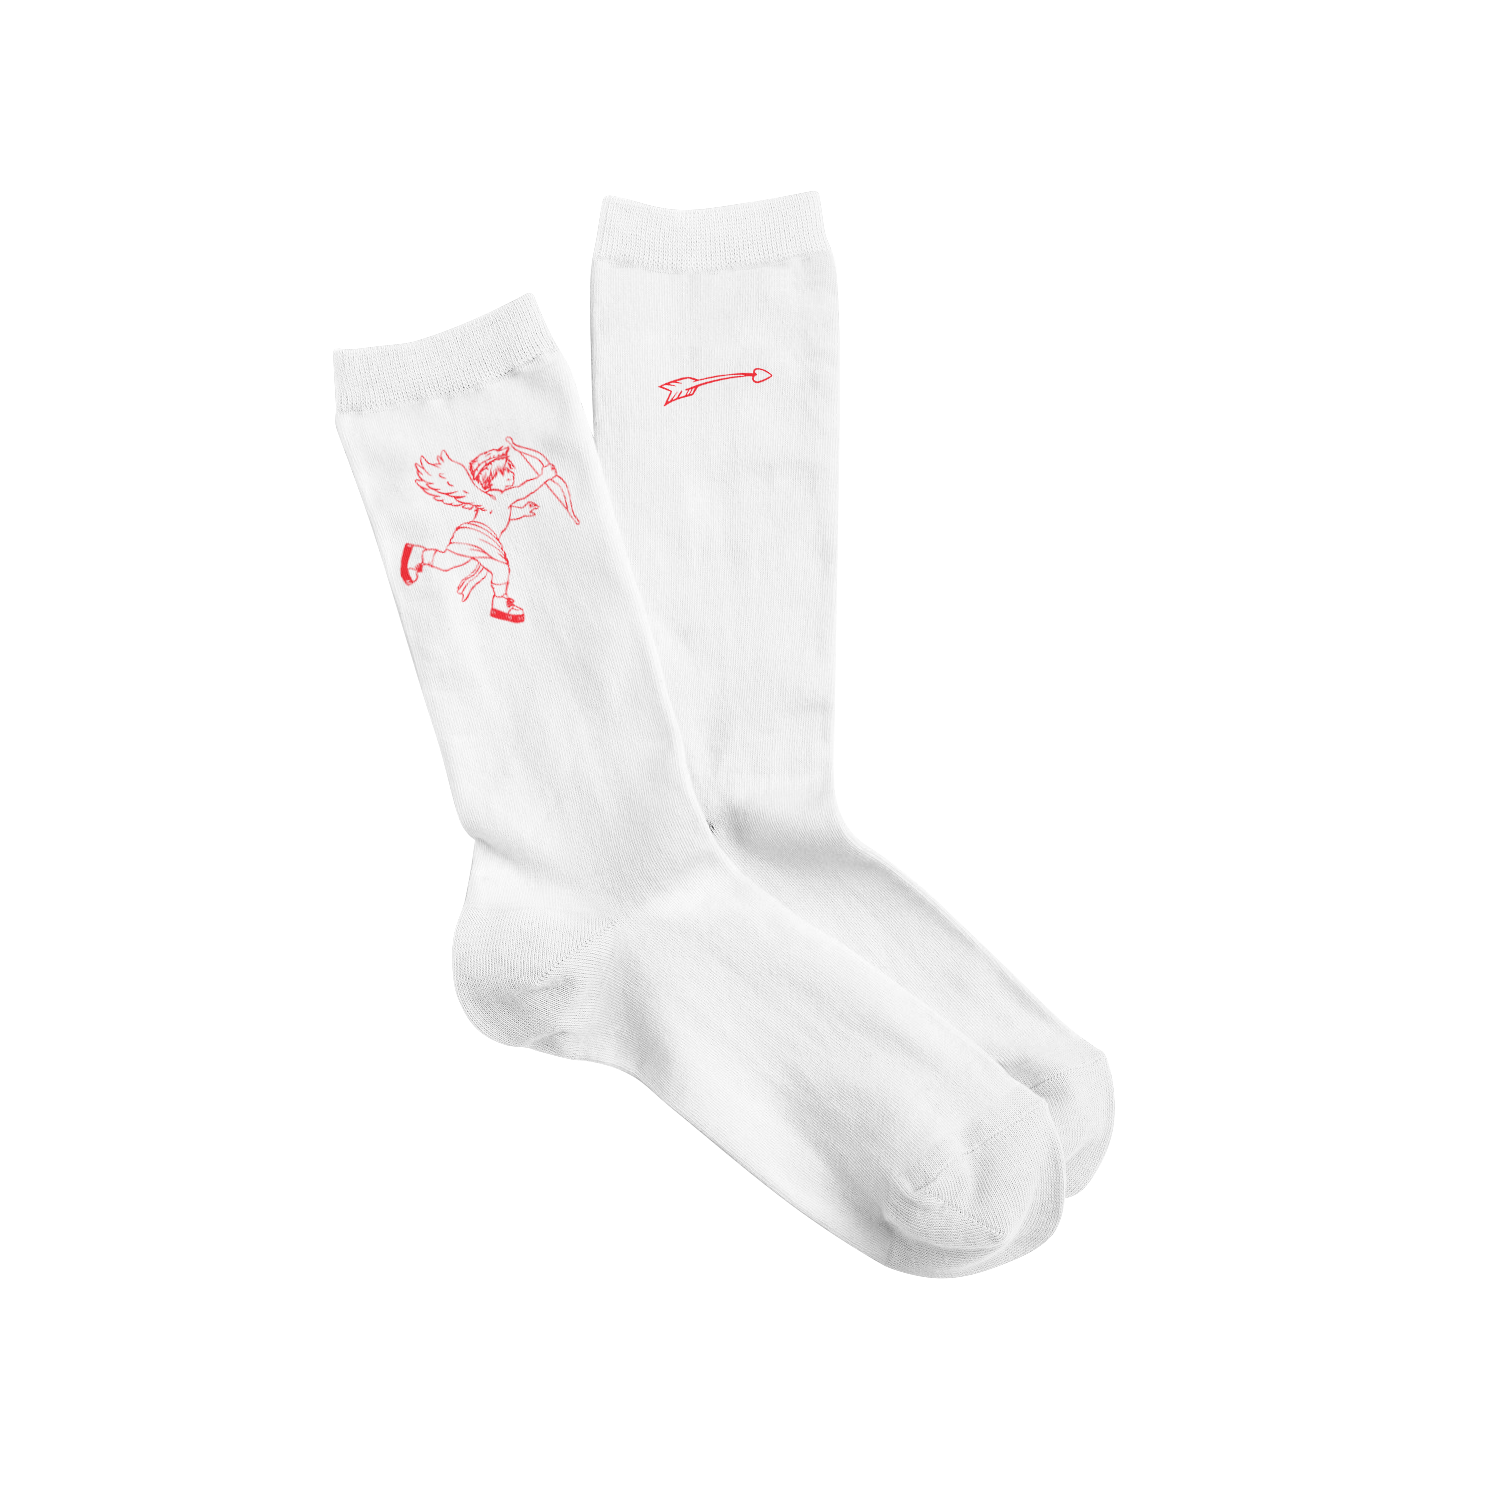 YUNGBLUD - White Athletic Socks